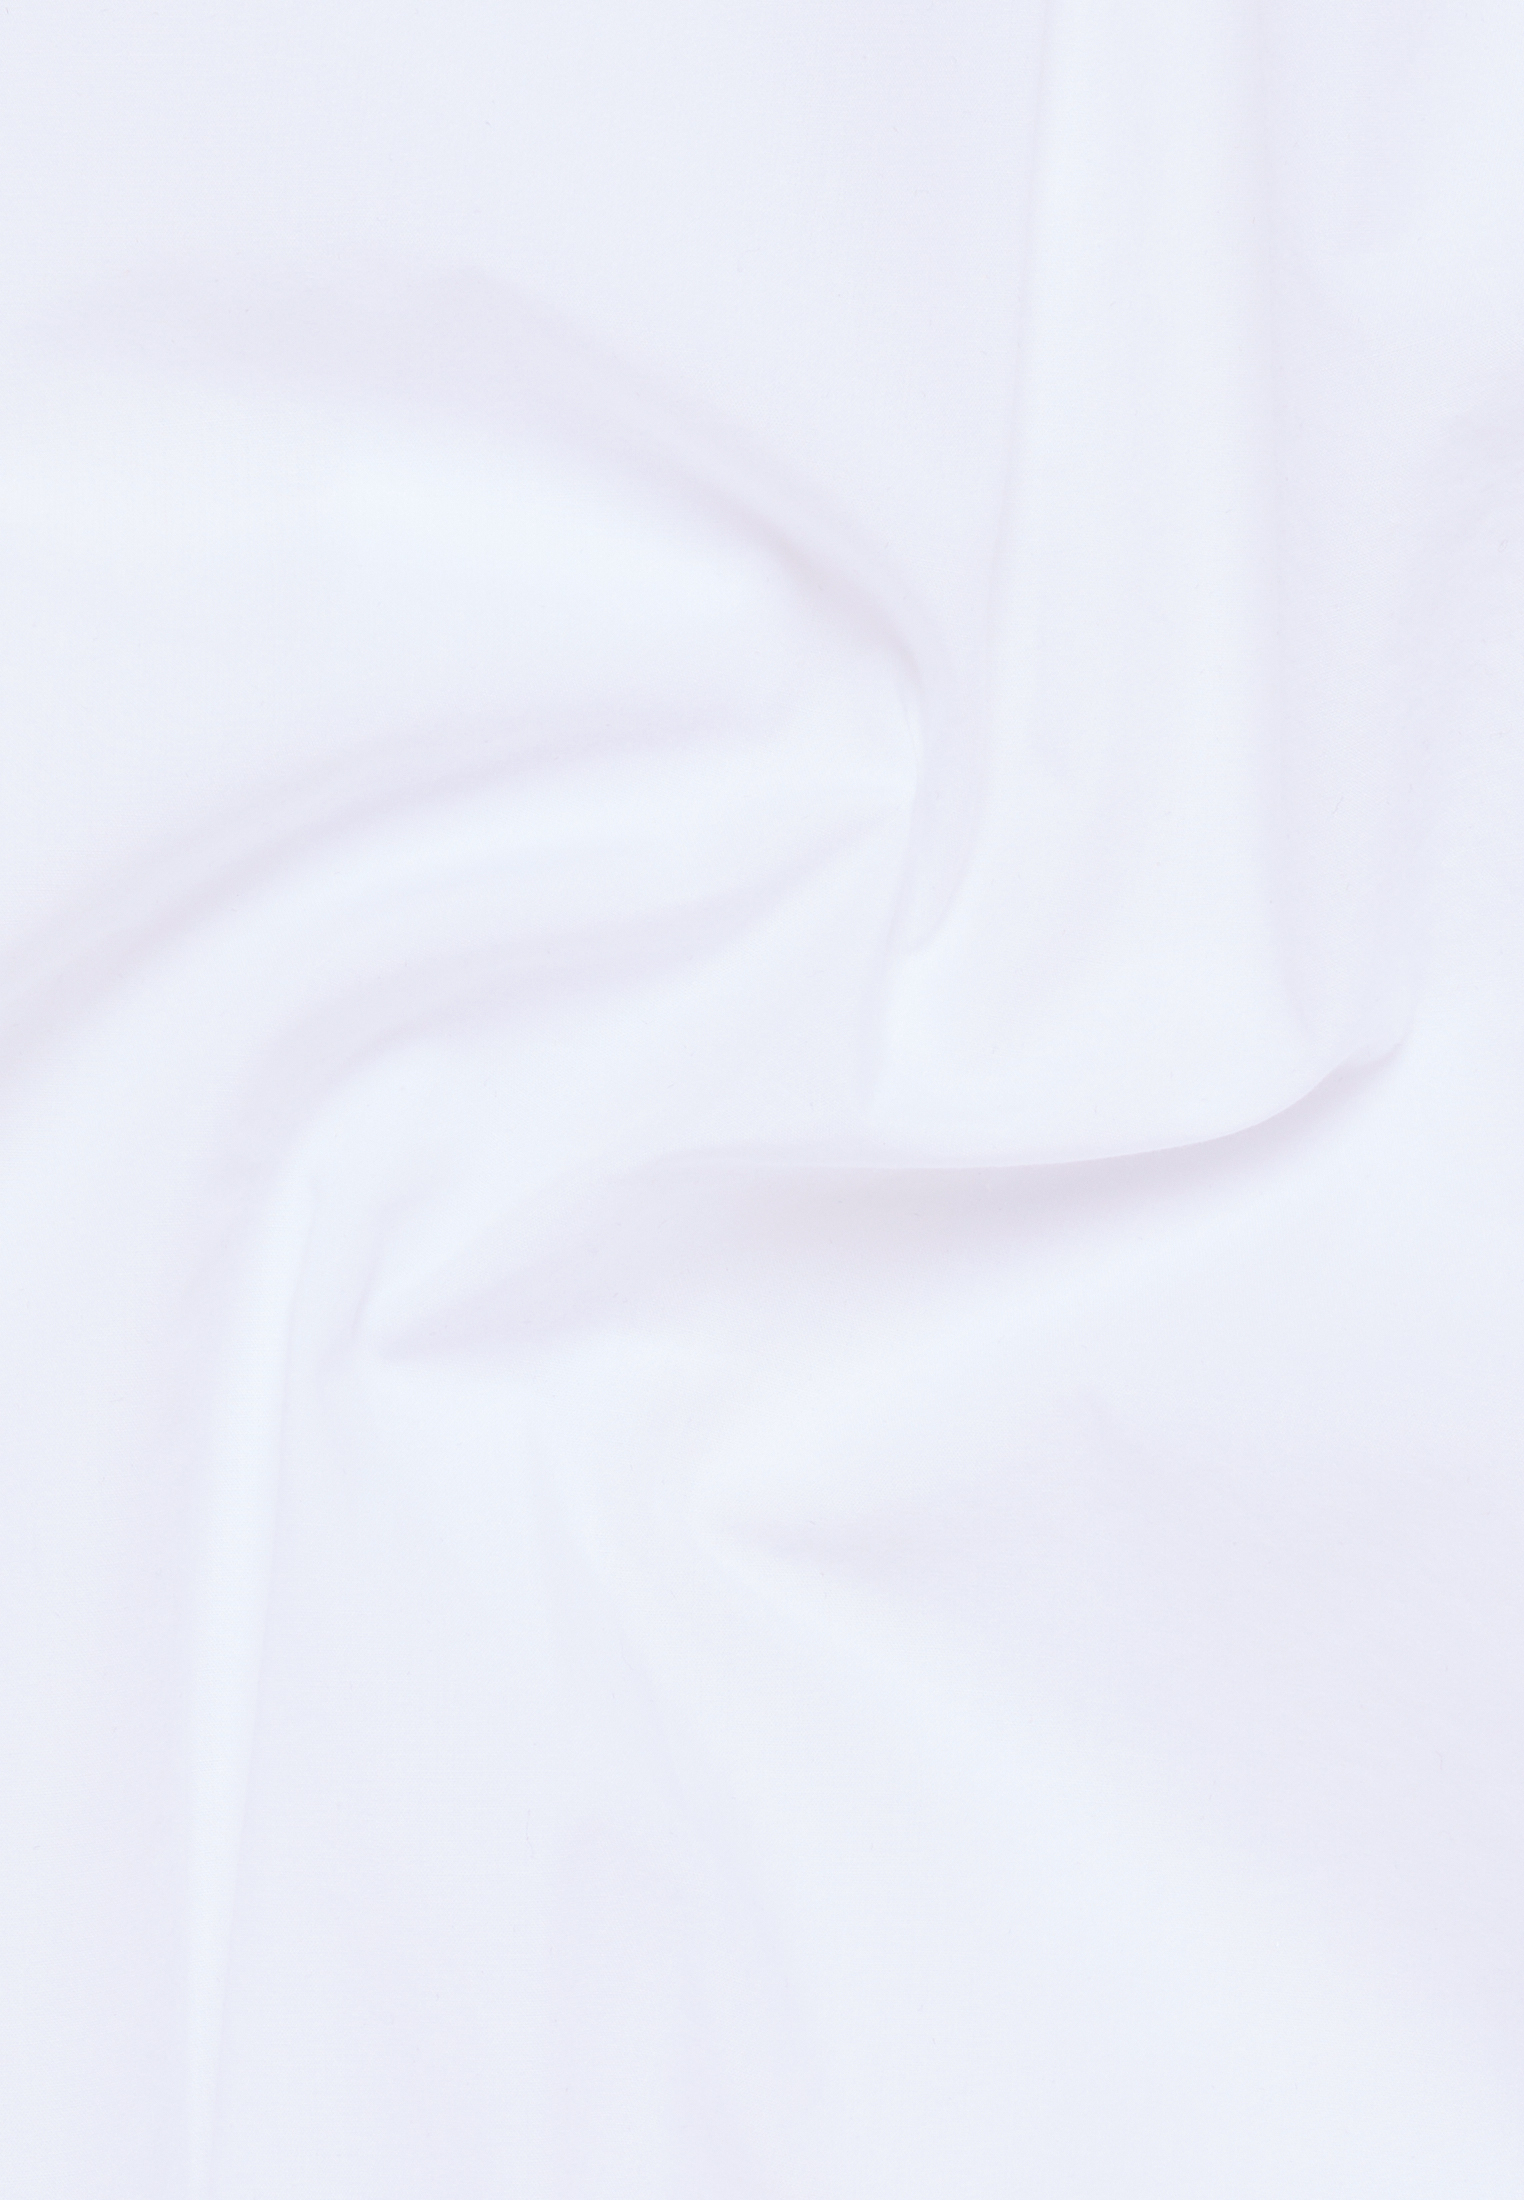 Hemdbluse in weiß unifarben | weiß | 38 | Langarm | 2BL04060-00-01-38-1/1 | Hemdblusen